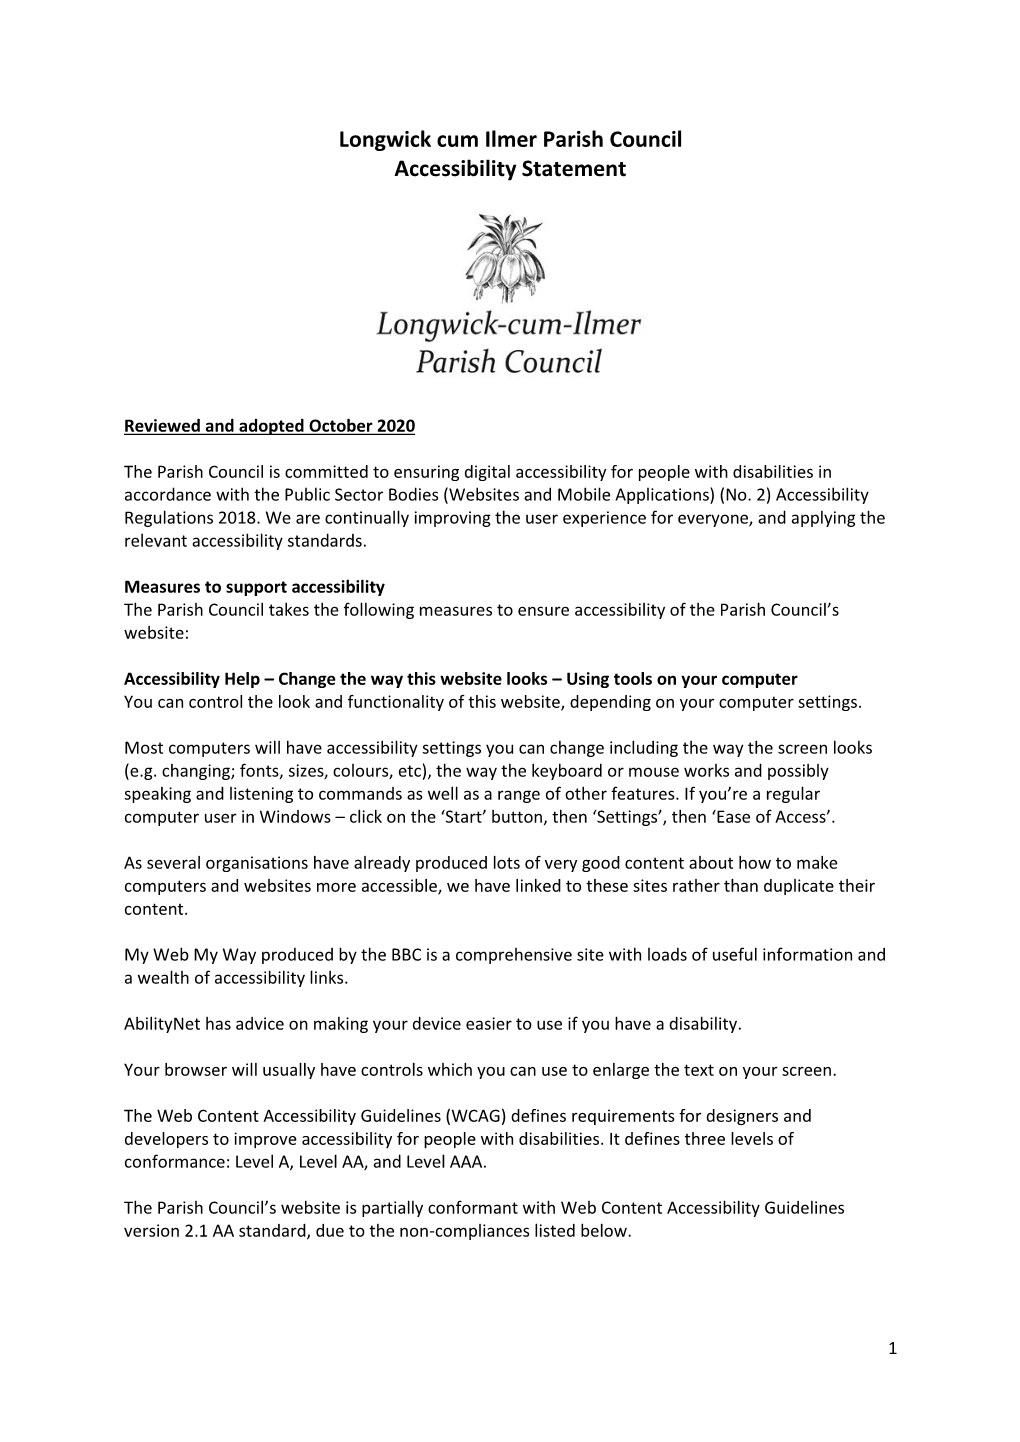 Longwick Cum Ilmer Parish Council Accessibility Statement